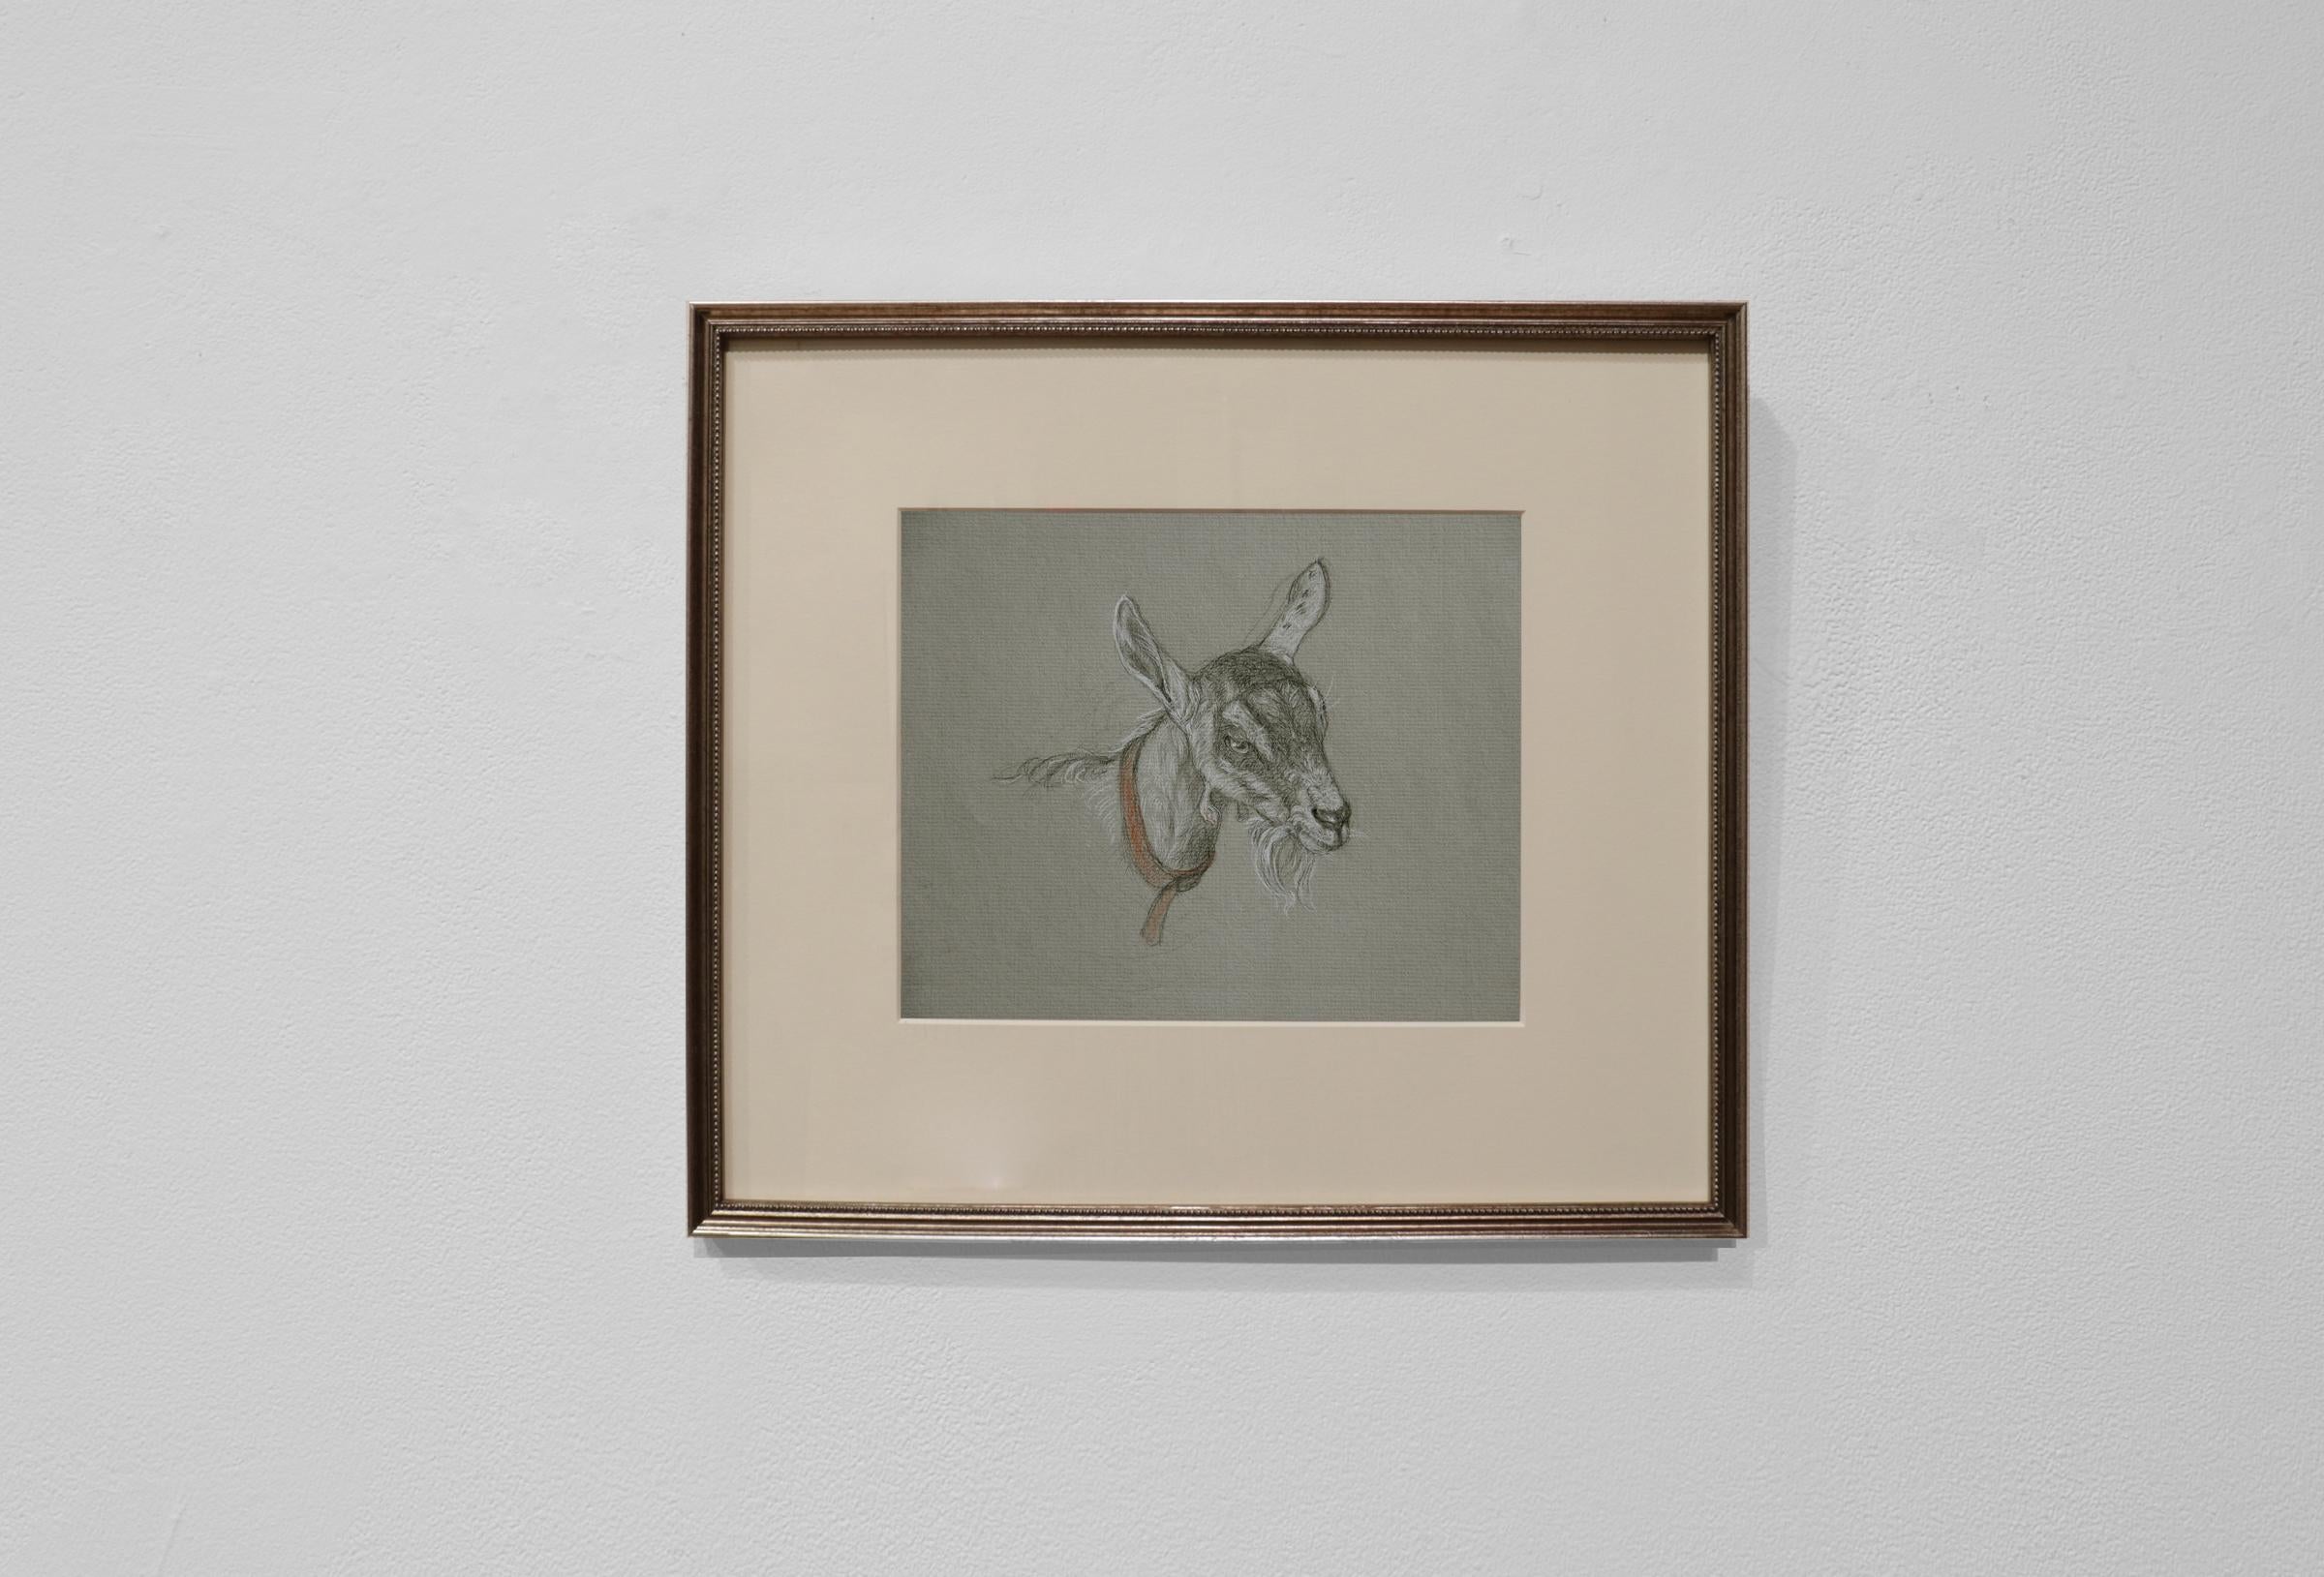 GOAT WITH ORANGE COLLAR - Traditional Realism / Animal Drawing / Farm Animal